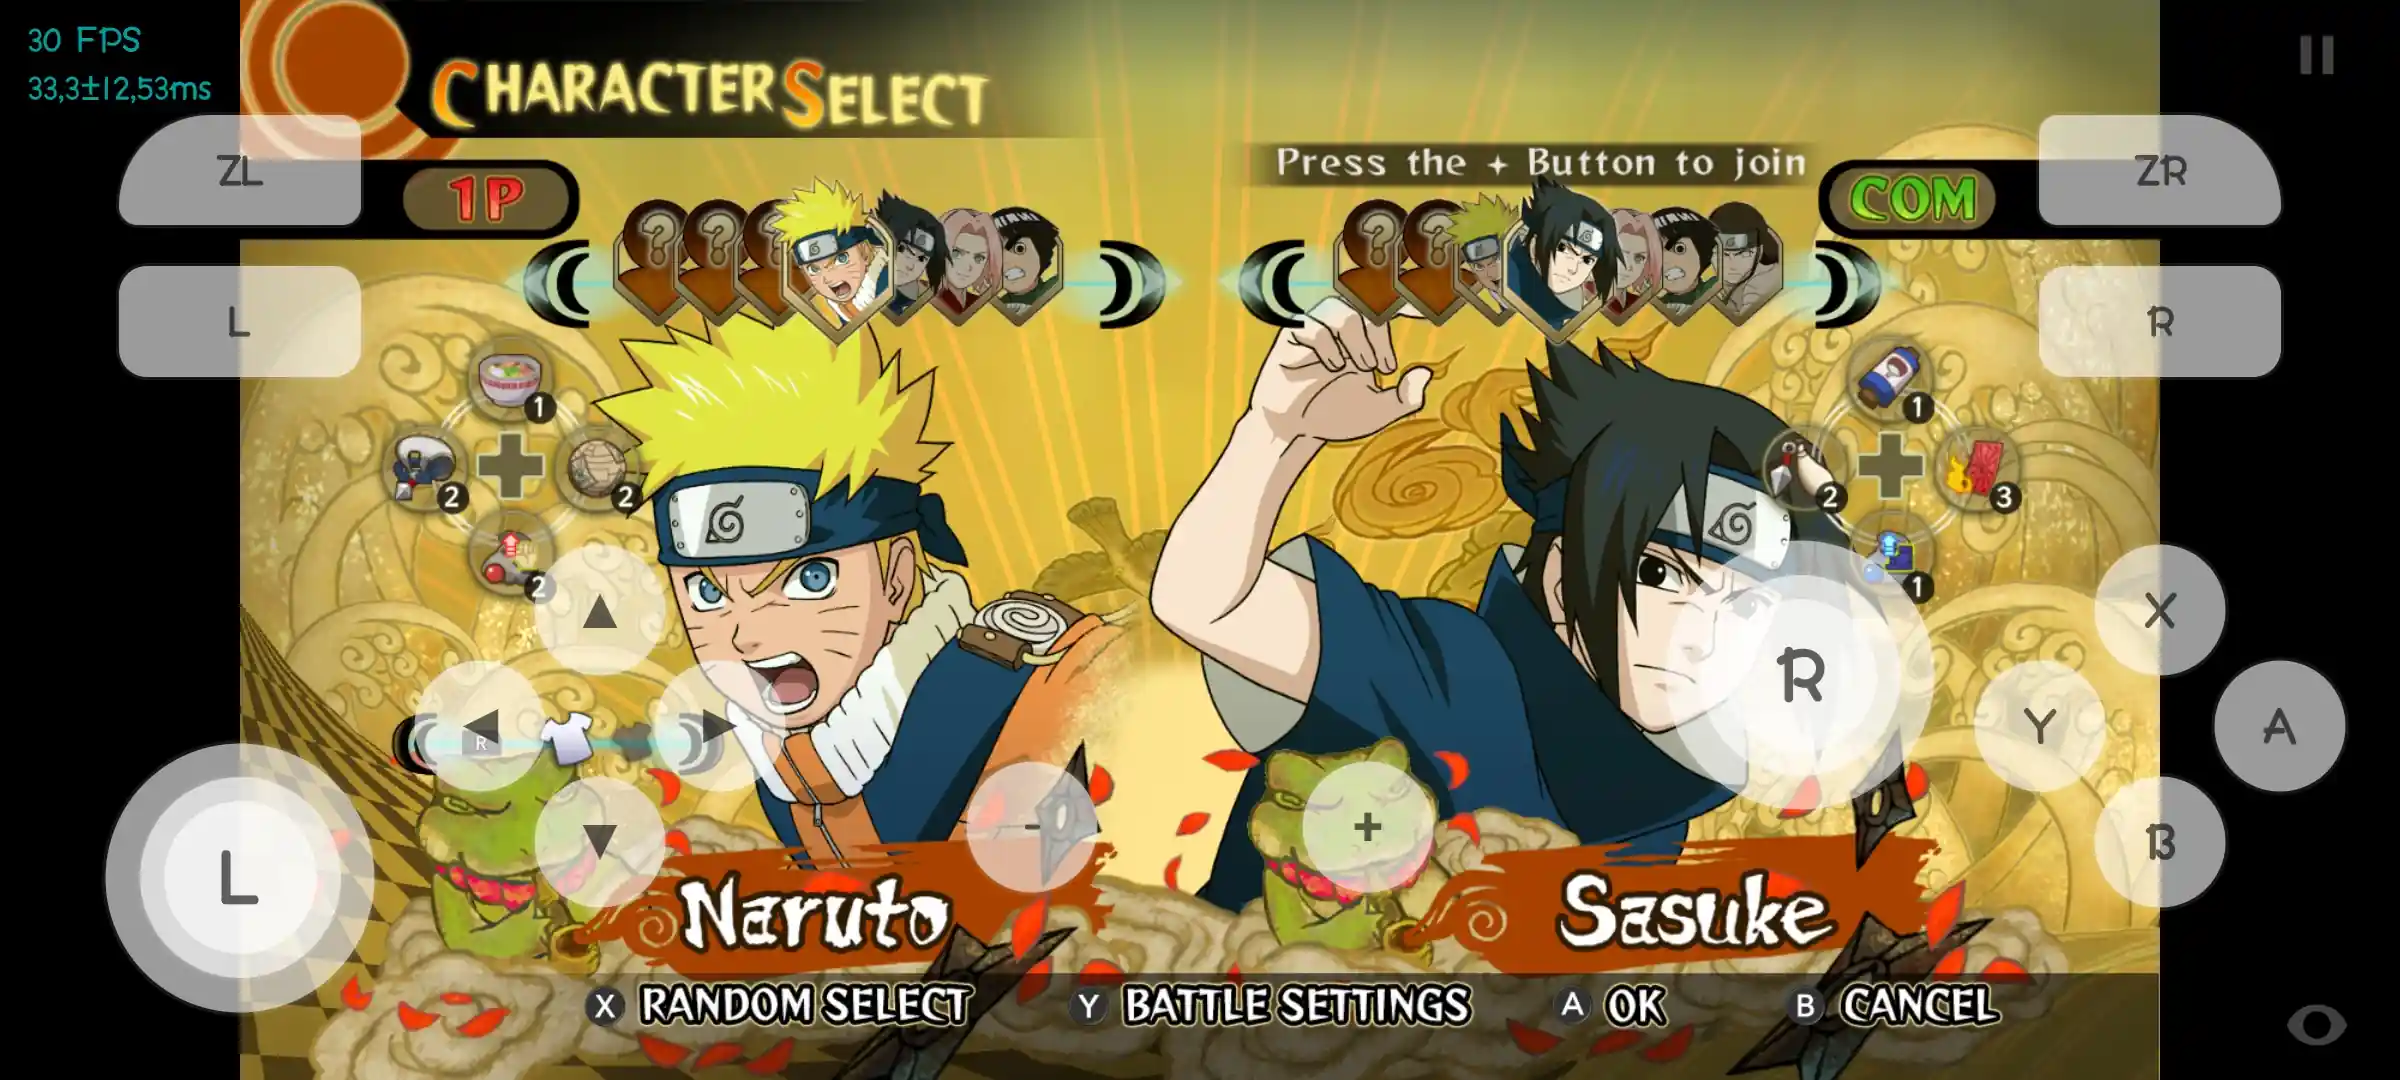 Naruto Ultimate Ninja Storm APK + OBB - Android Download - Skyline Edge Emulator